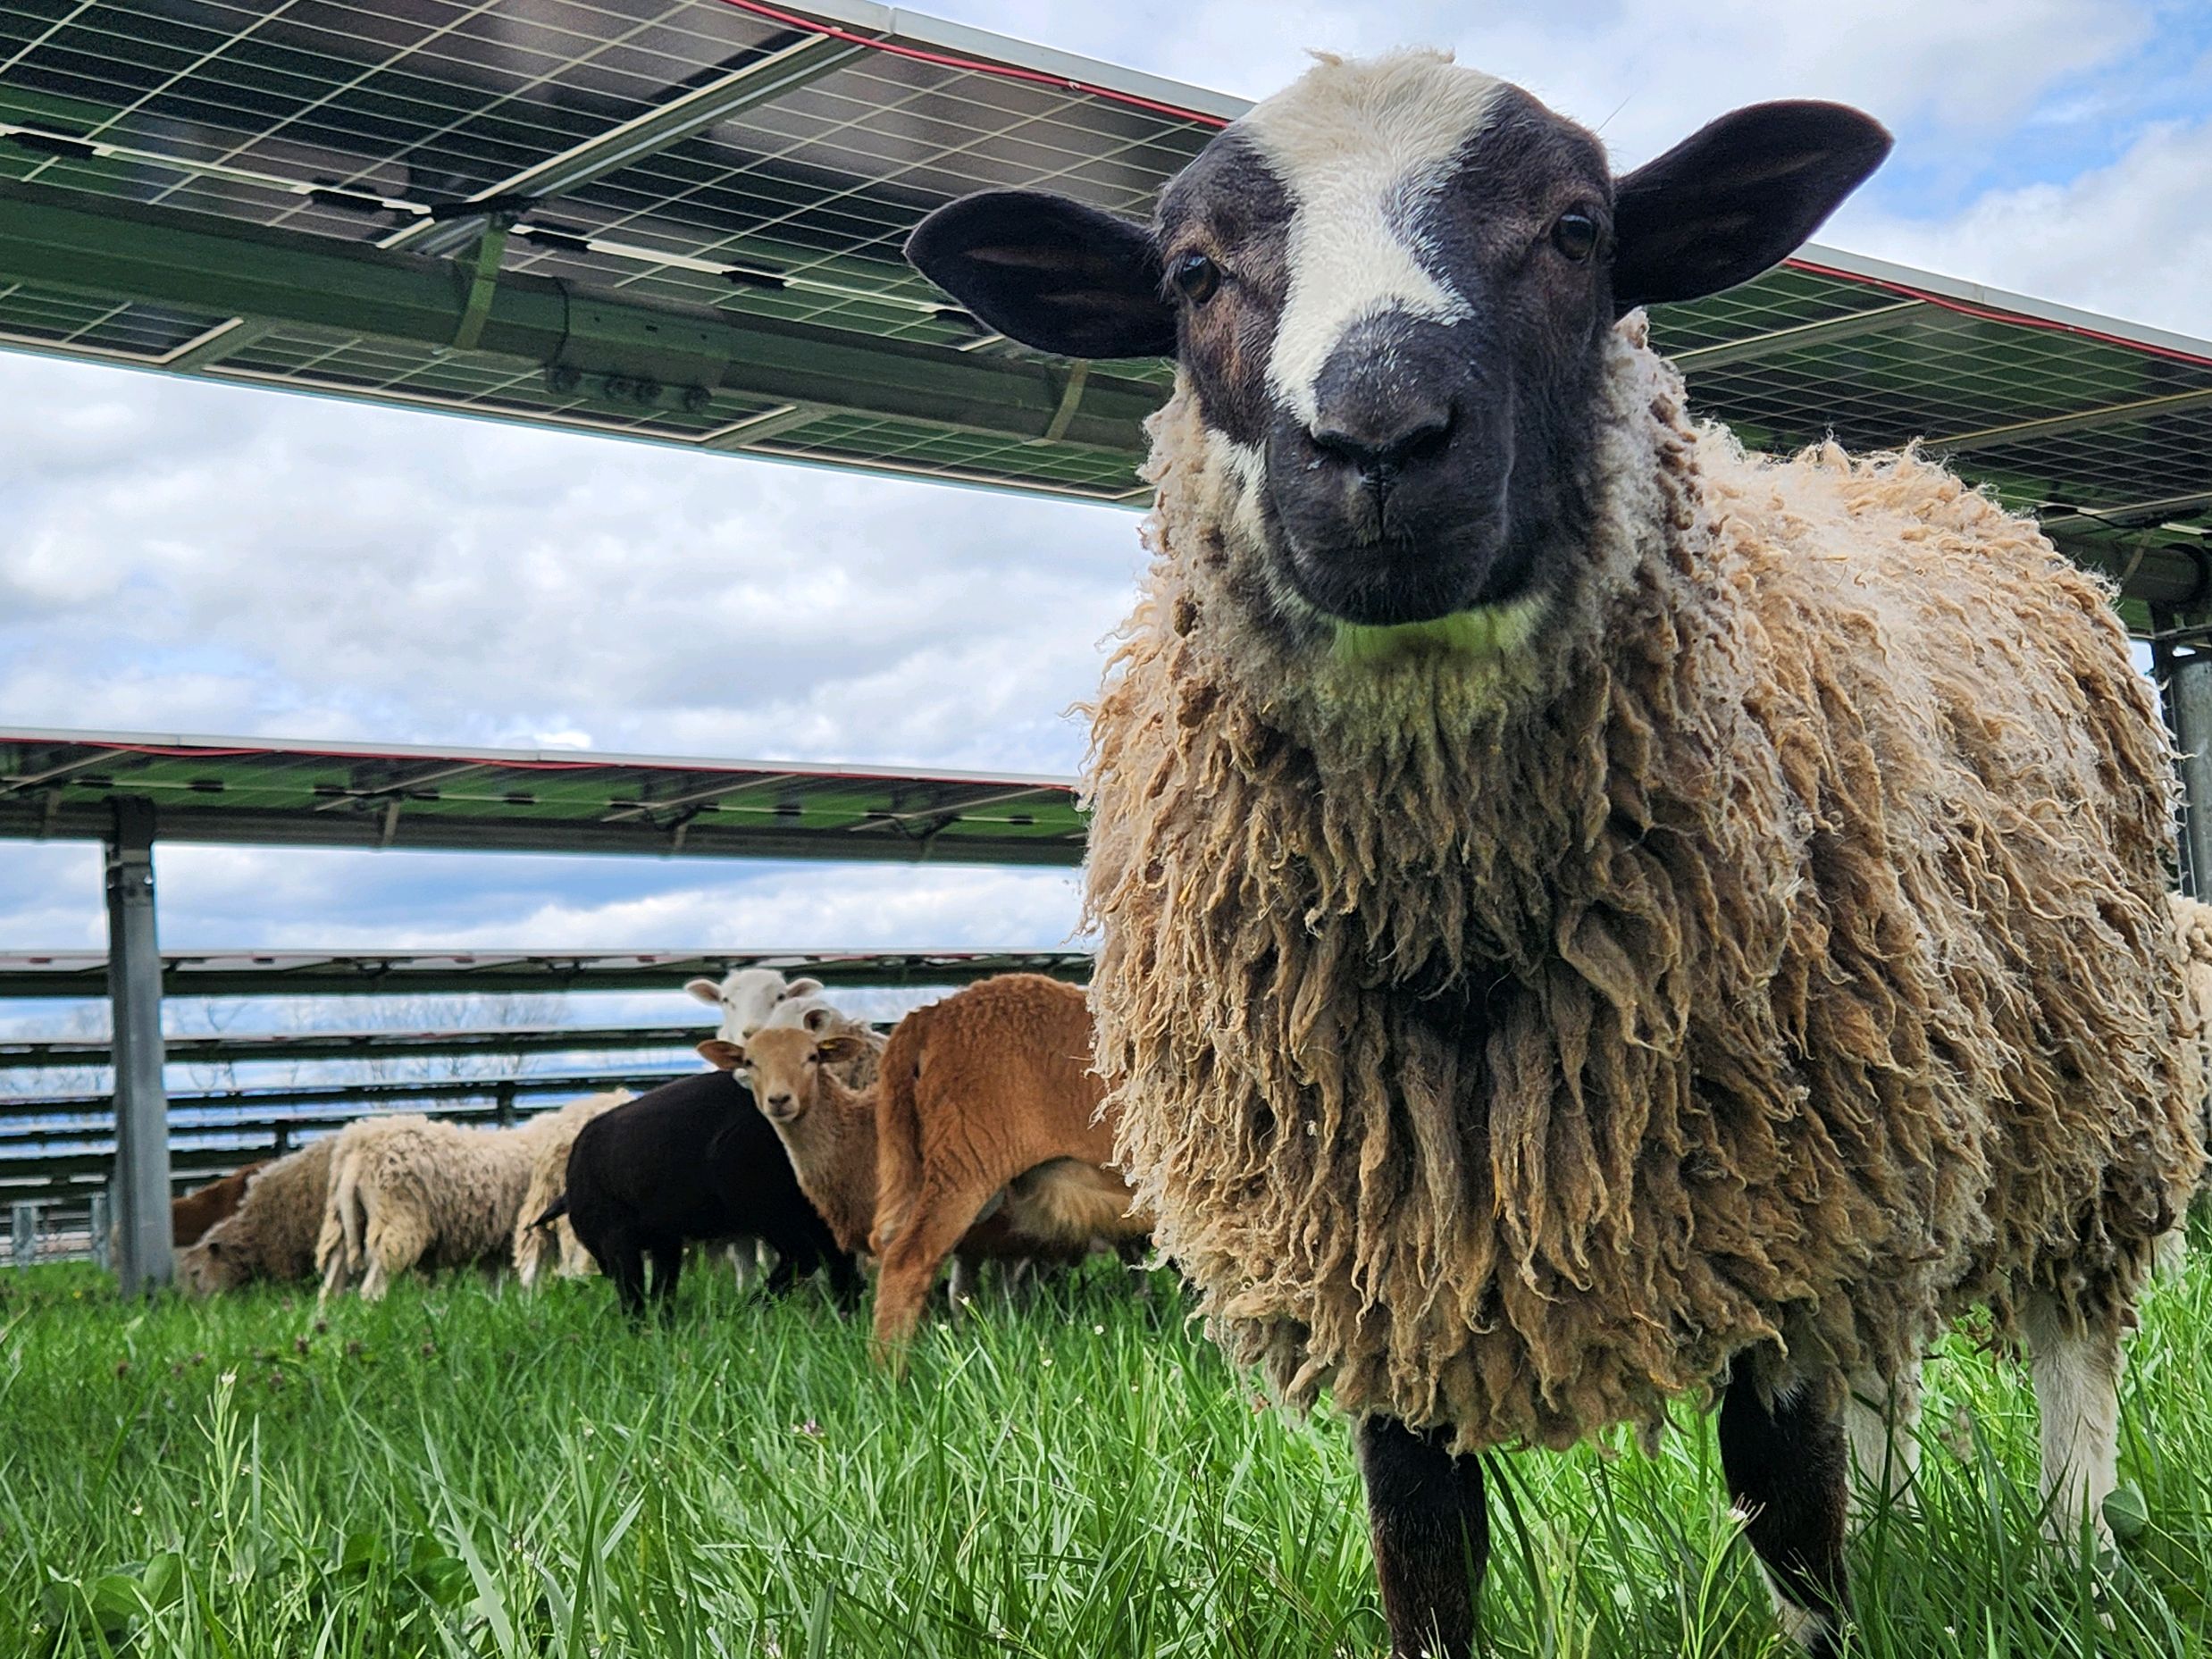 Wool ewe standing in front of sheep grazing under solar panels